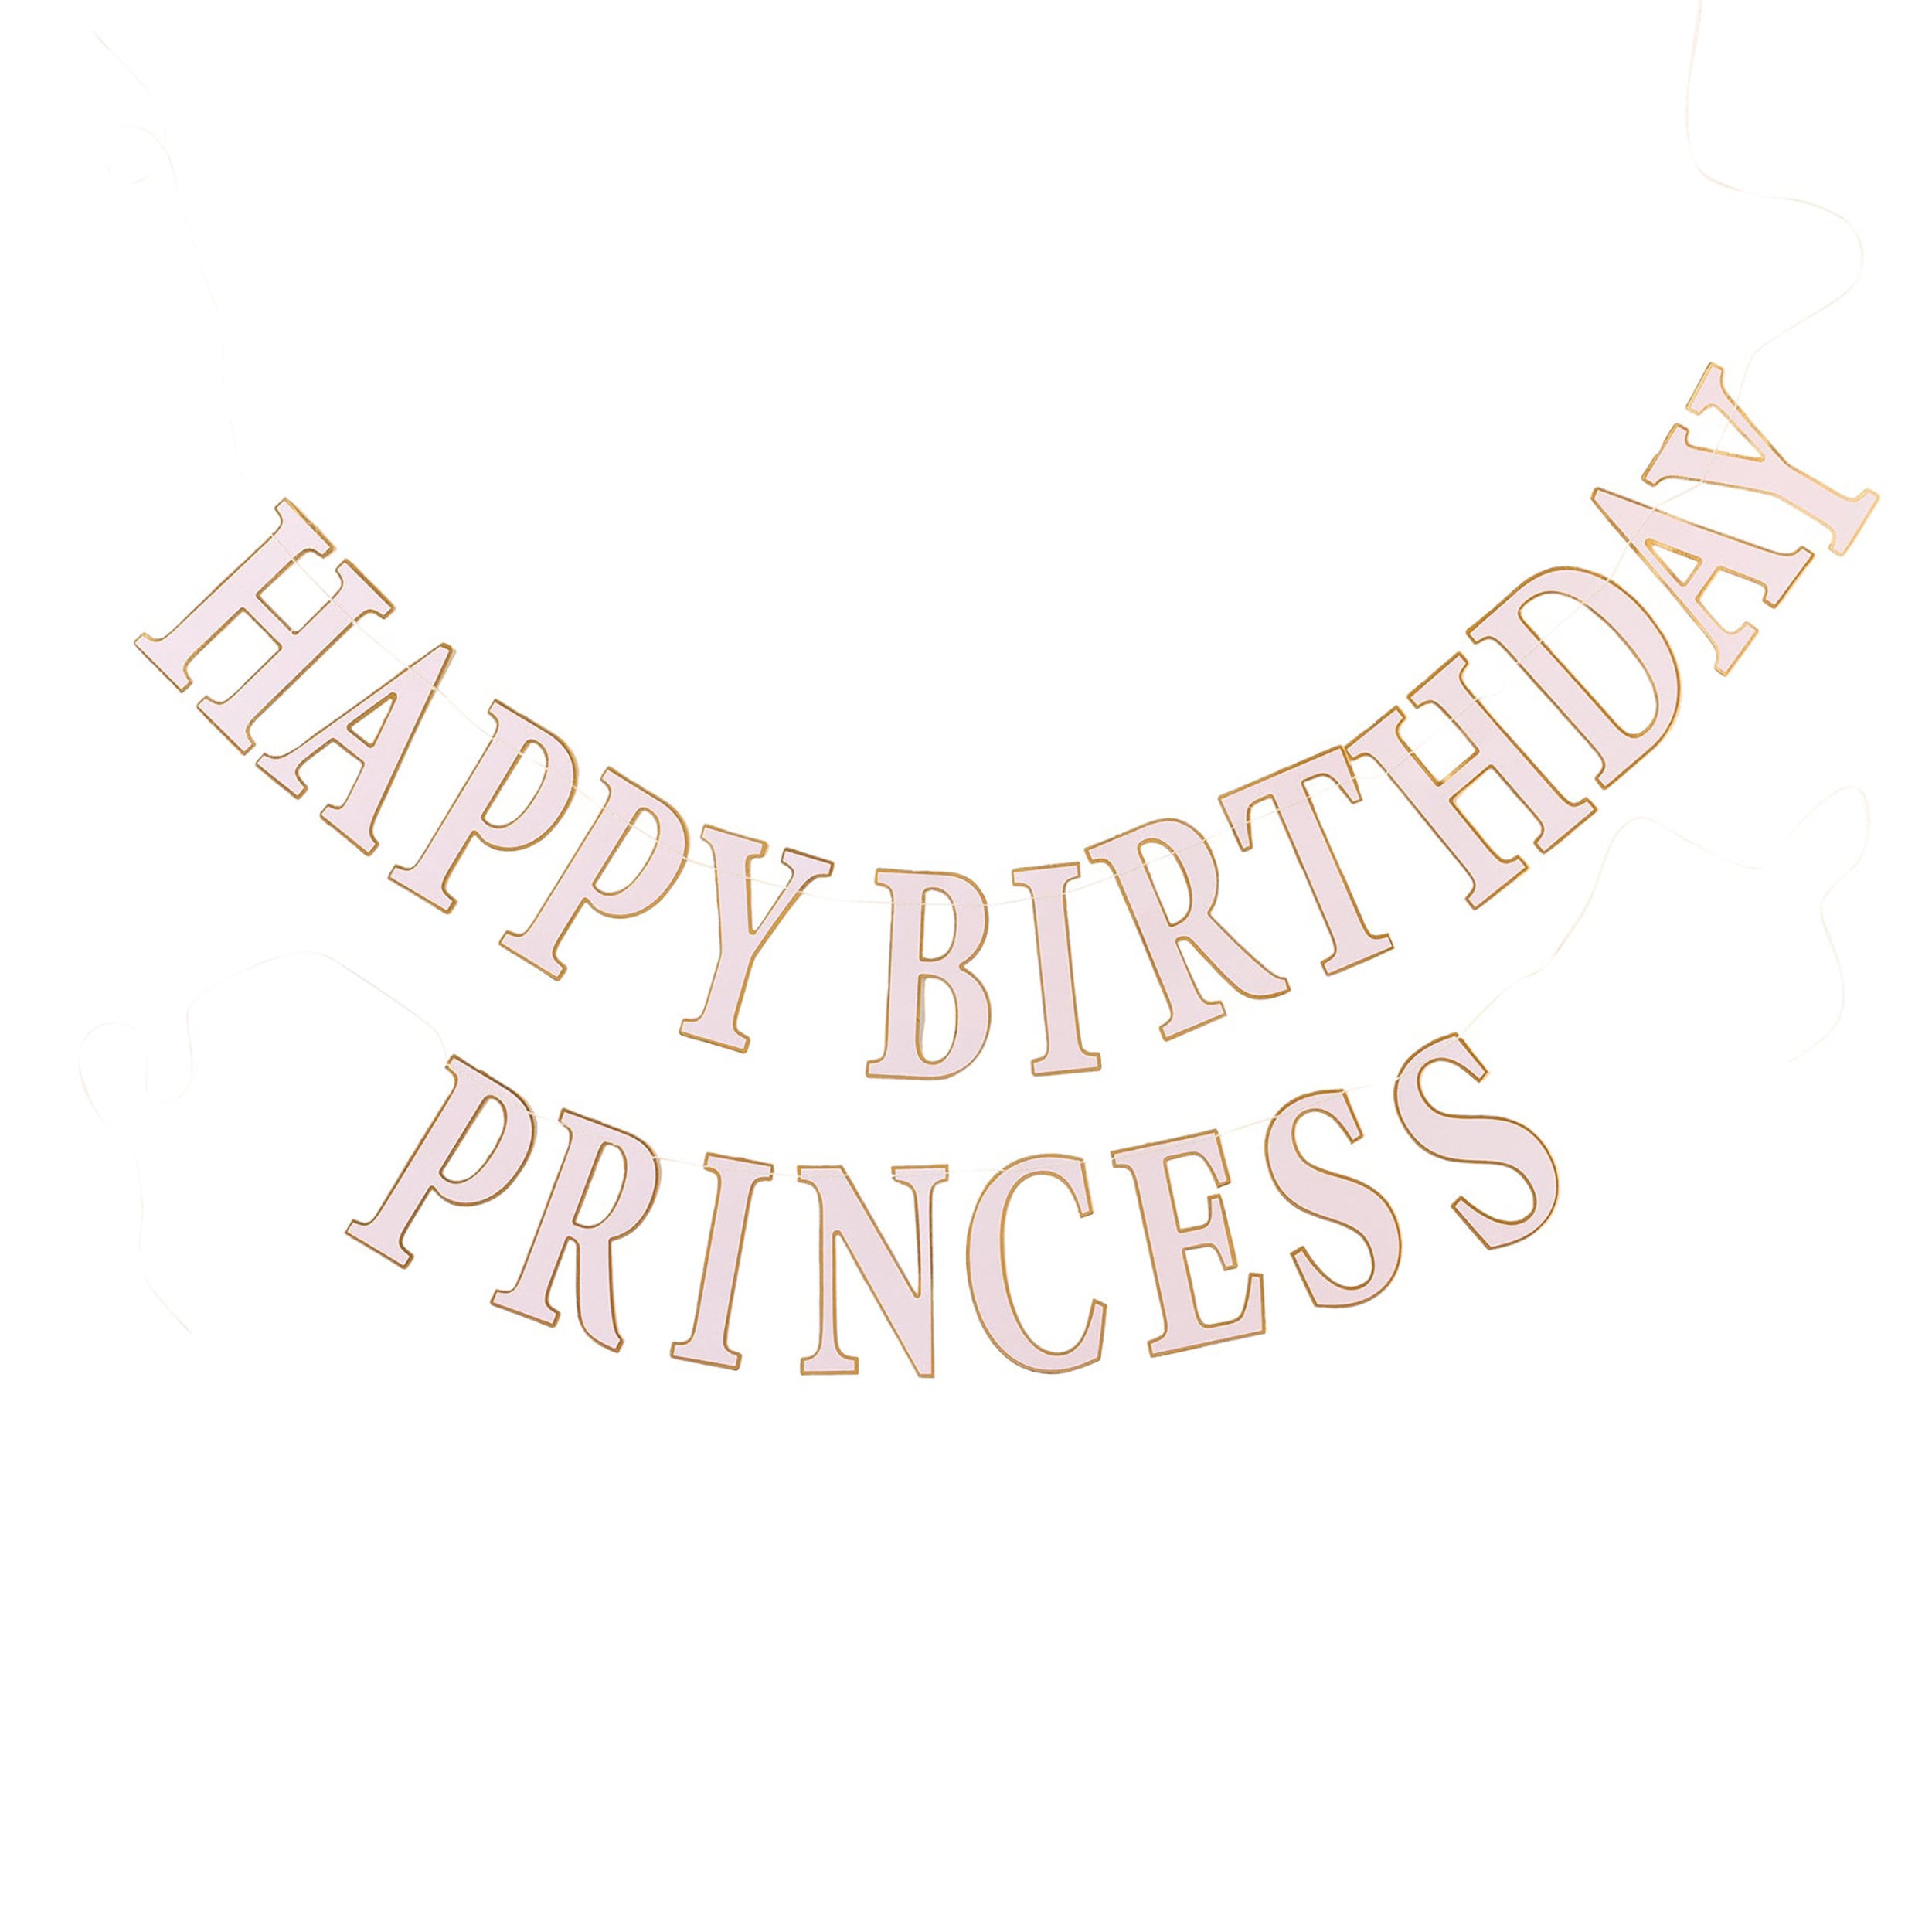 Happy Birthday Princess Banner | Princess Birthday Party Decorations - Princess Backdrop - Princess Banner - Princess Party Decorations